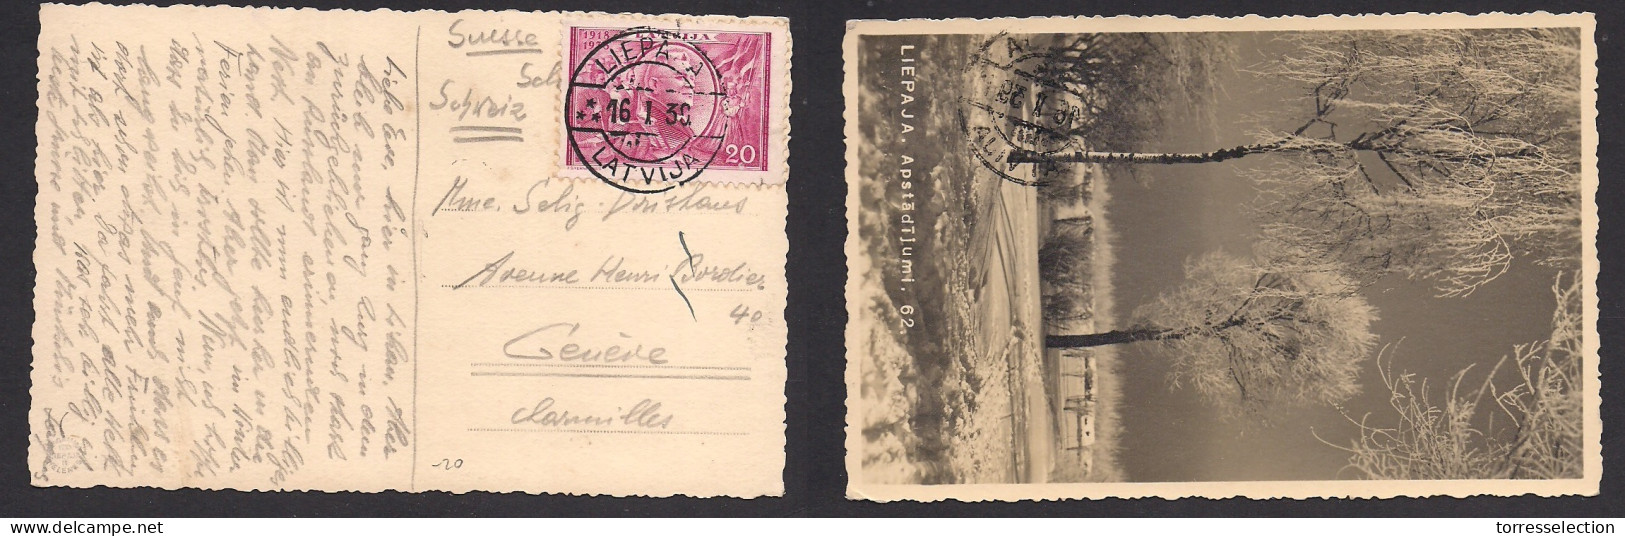 LATVIA. 1939 (16 Jan) Liepaja - Switzerland, Geneve. Single 20c Violet Fkd Ppc. Fine. - Letland